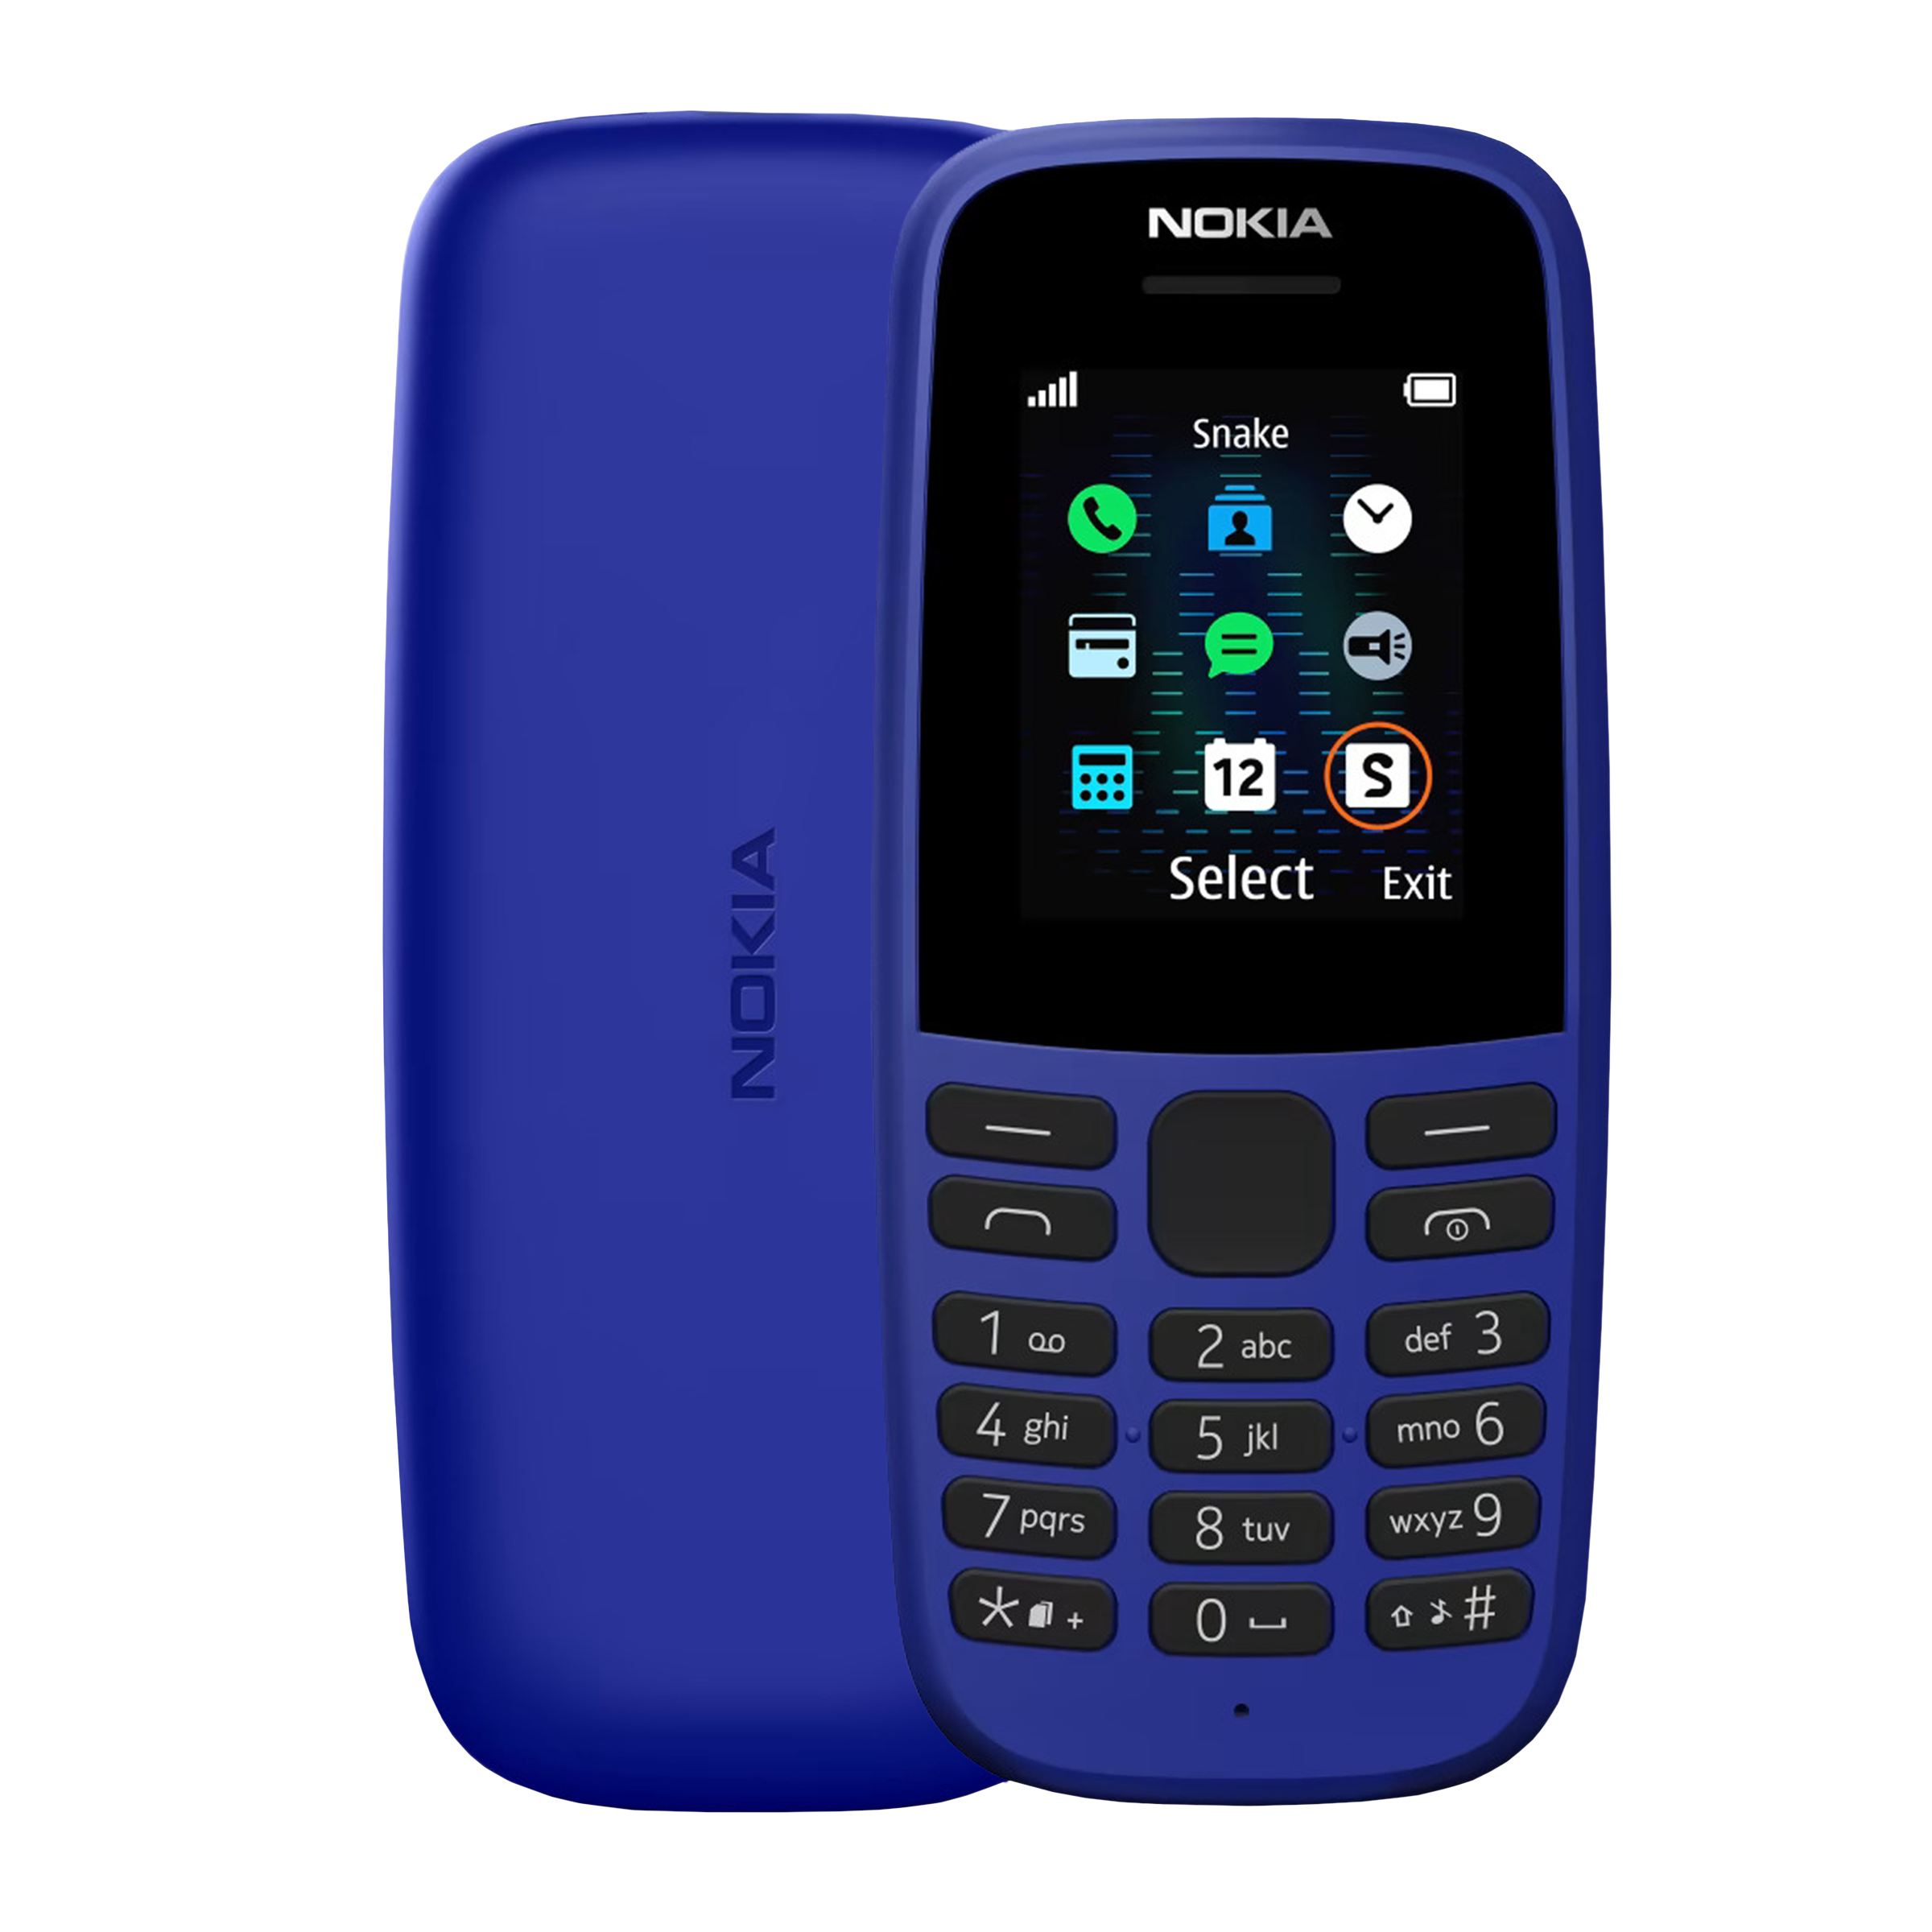 Nokia 105 Dual SIM, Keypad Mobile Phone with Wireless FM Radio